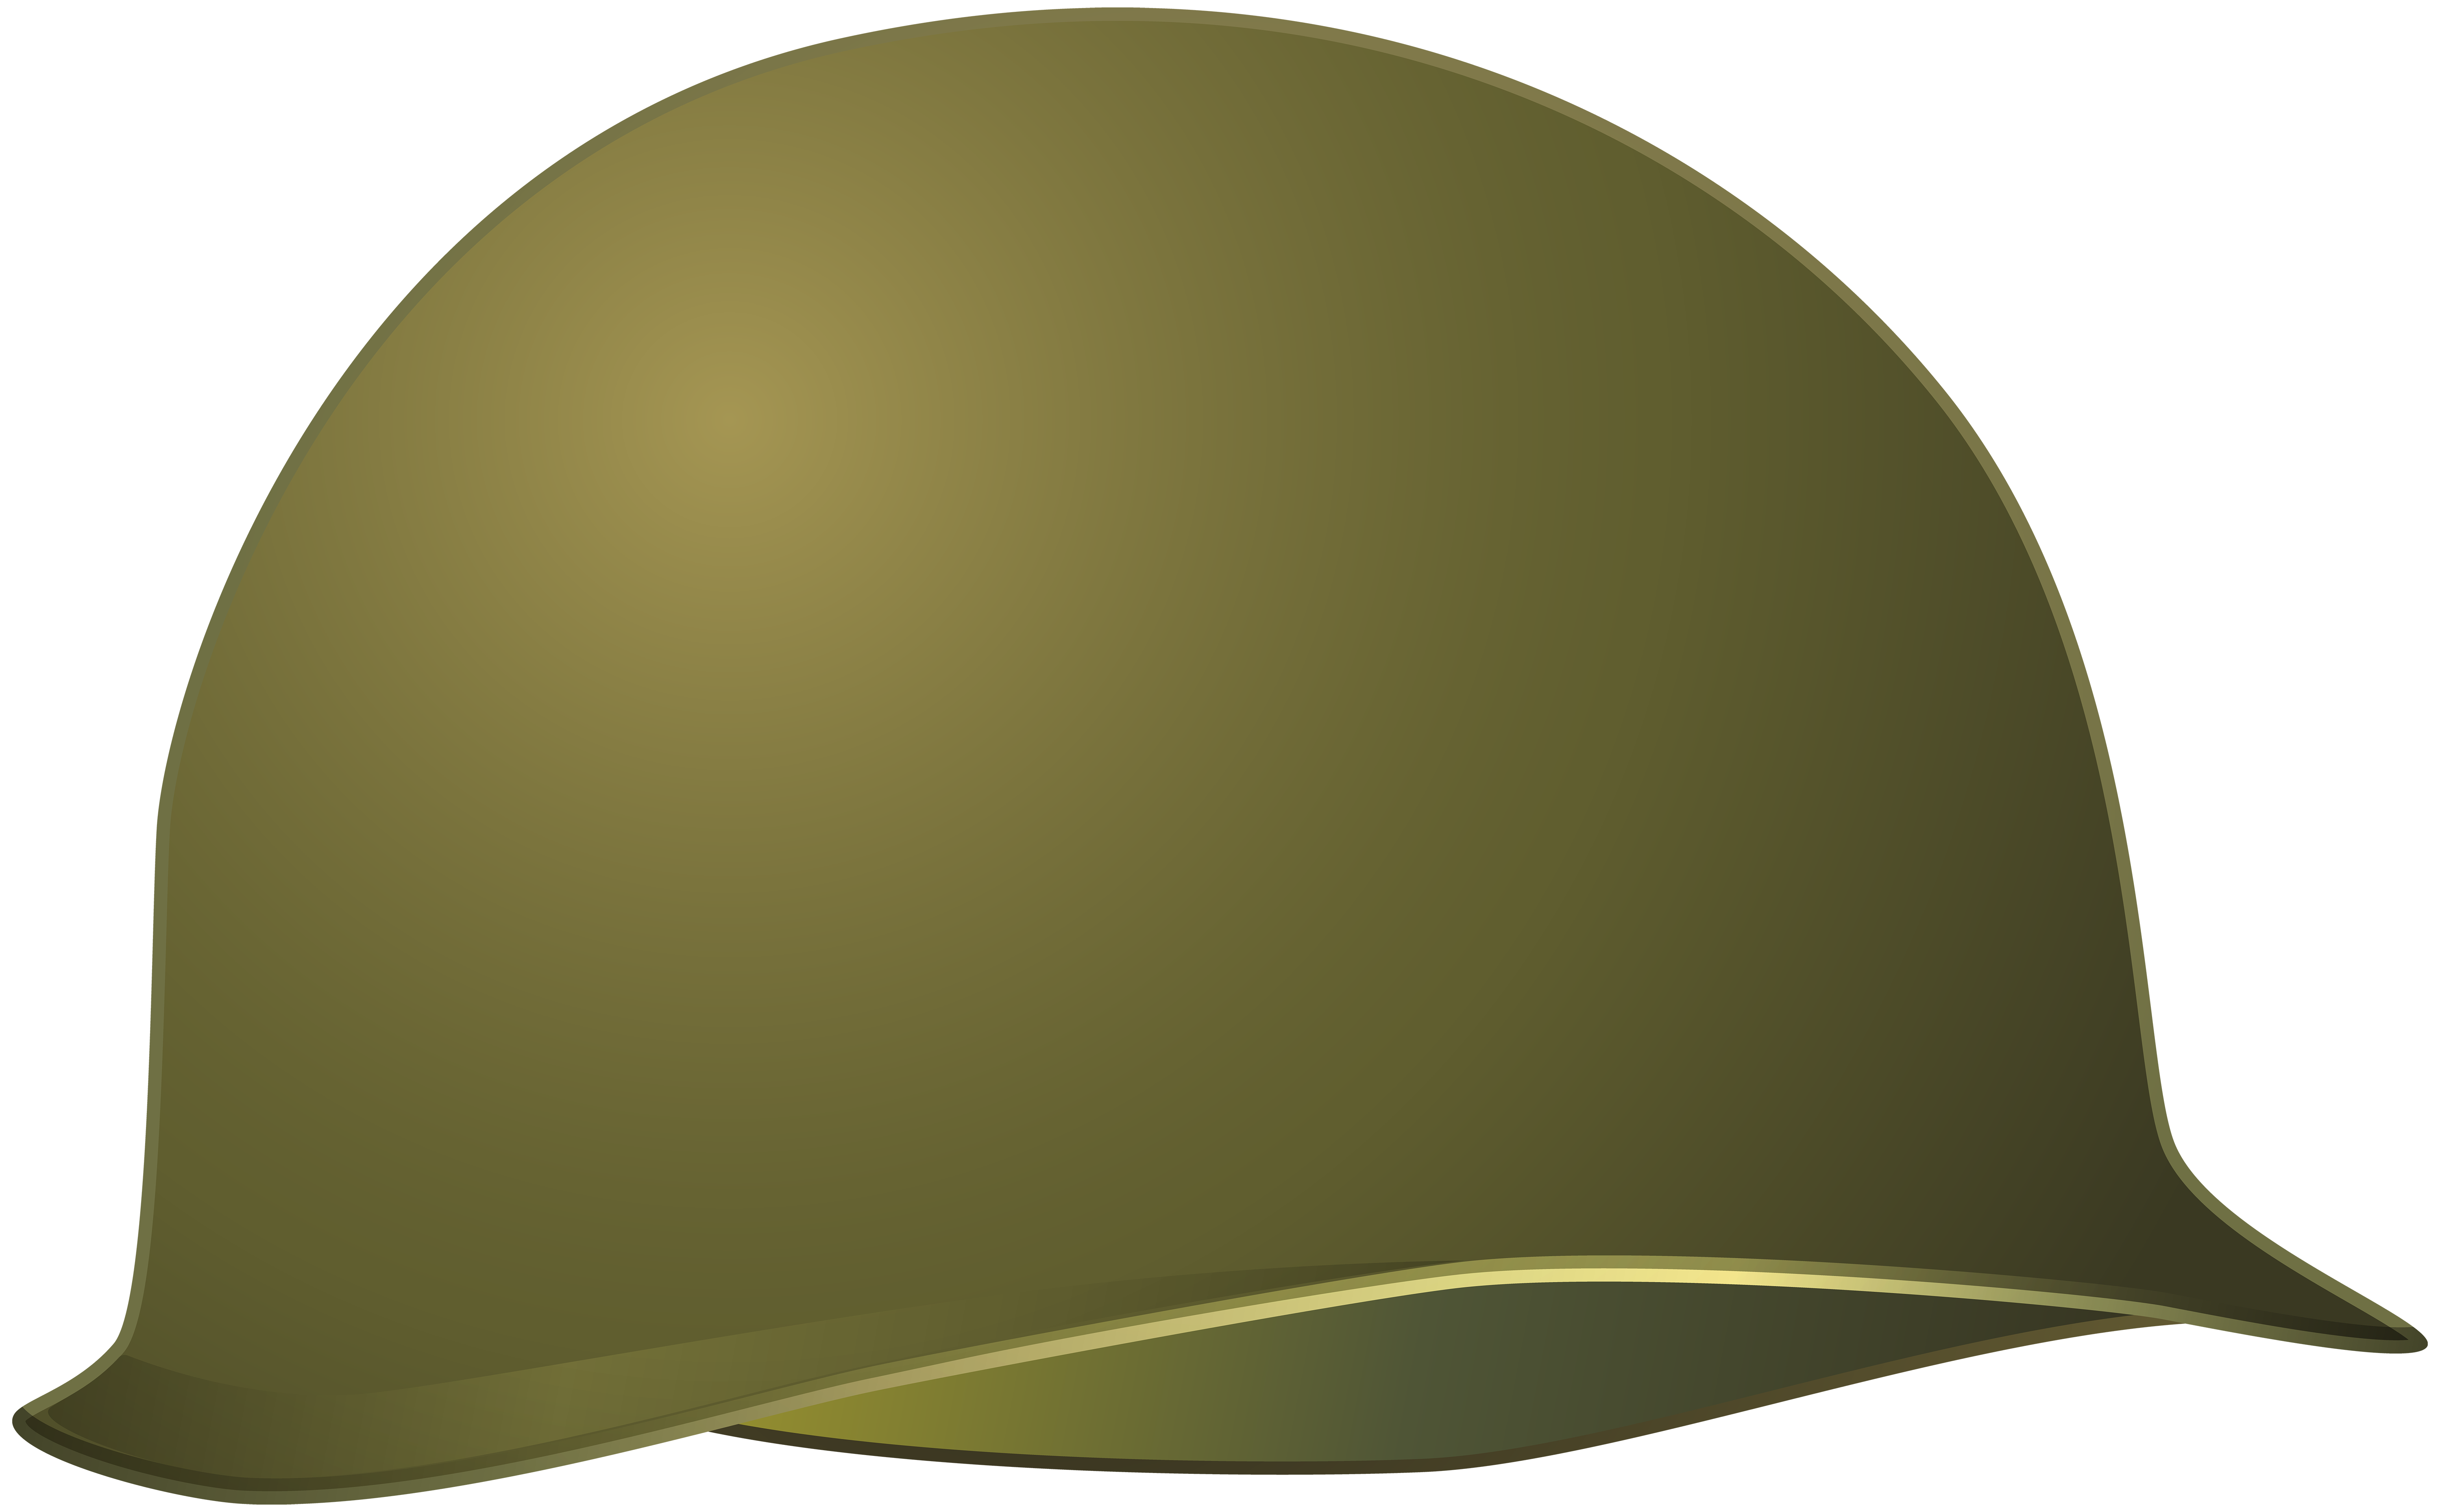 military helmet clip art - photo #37